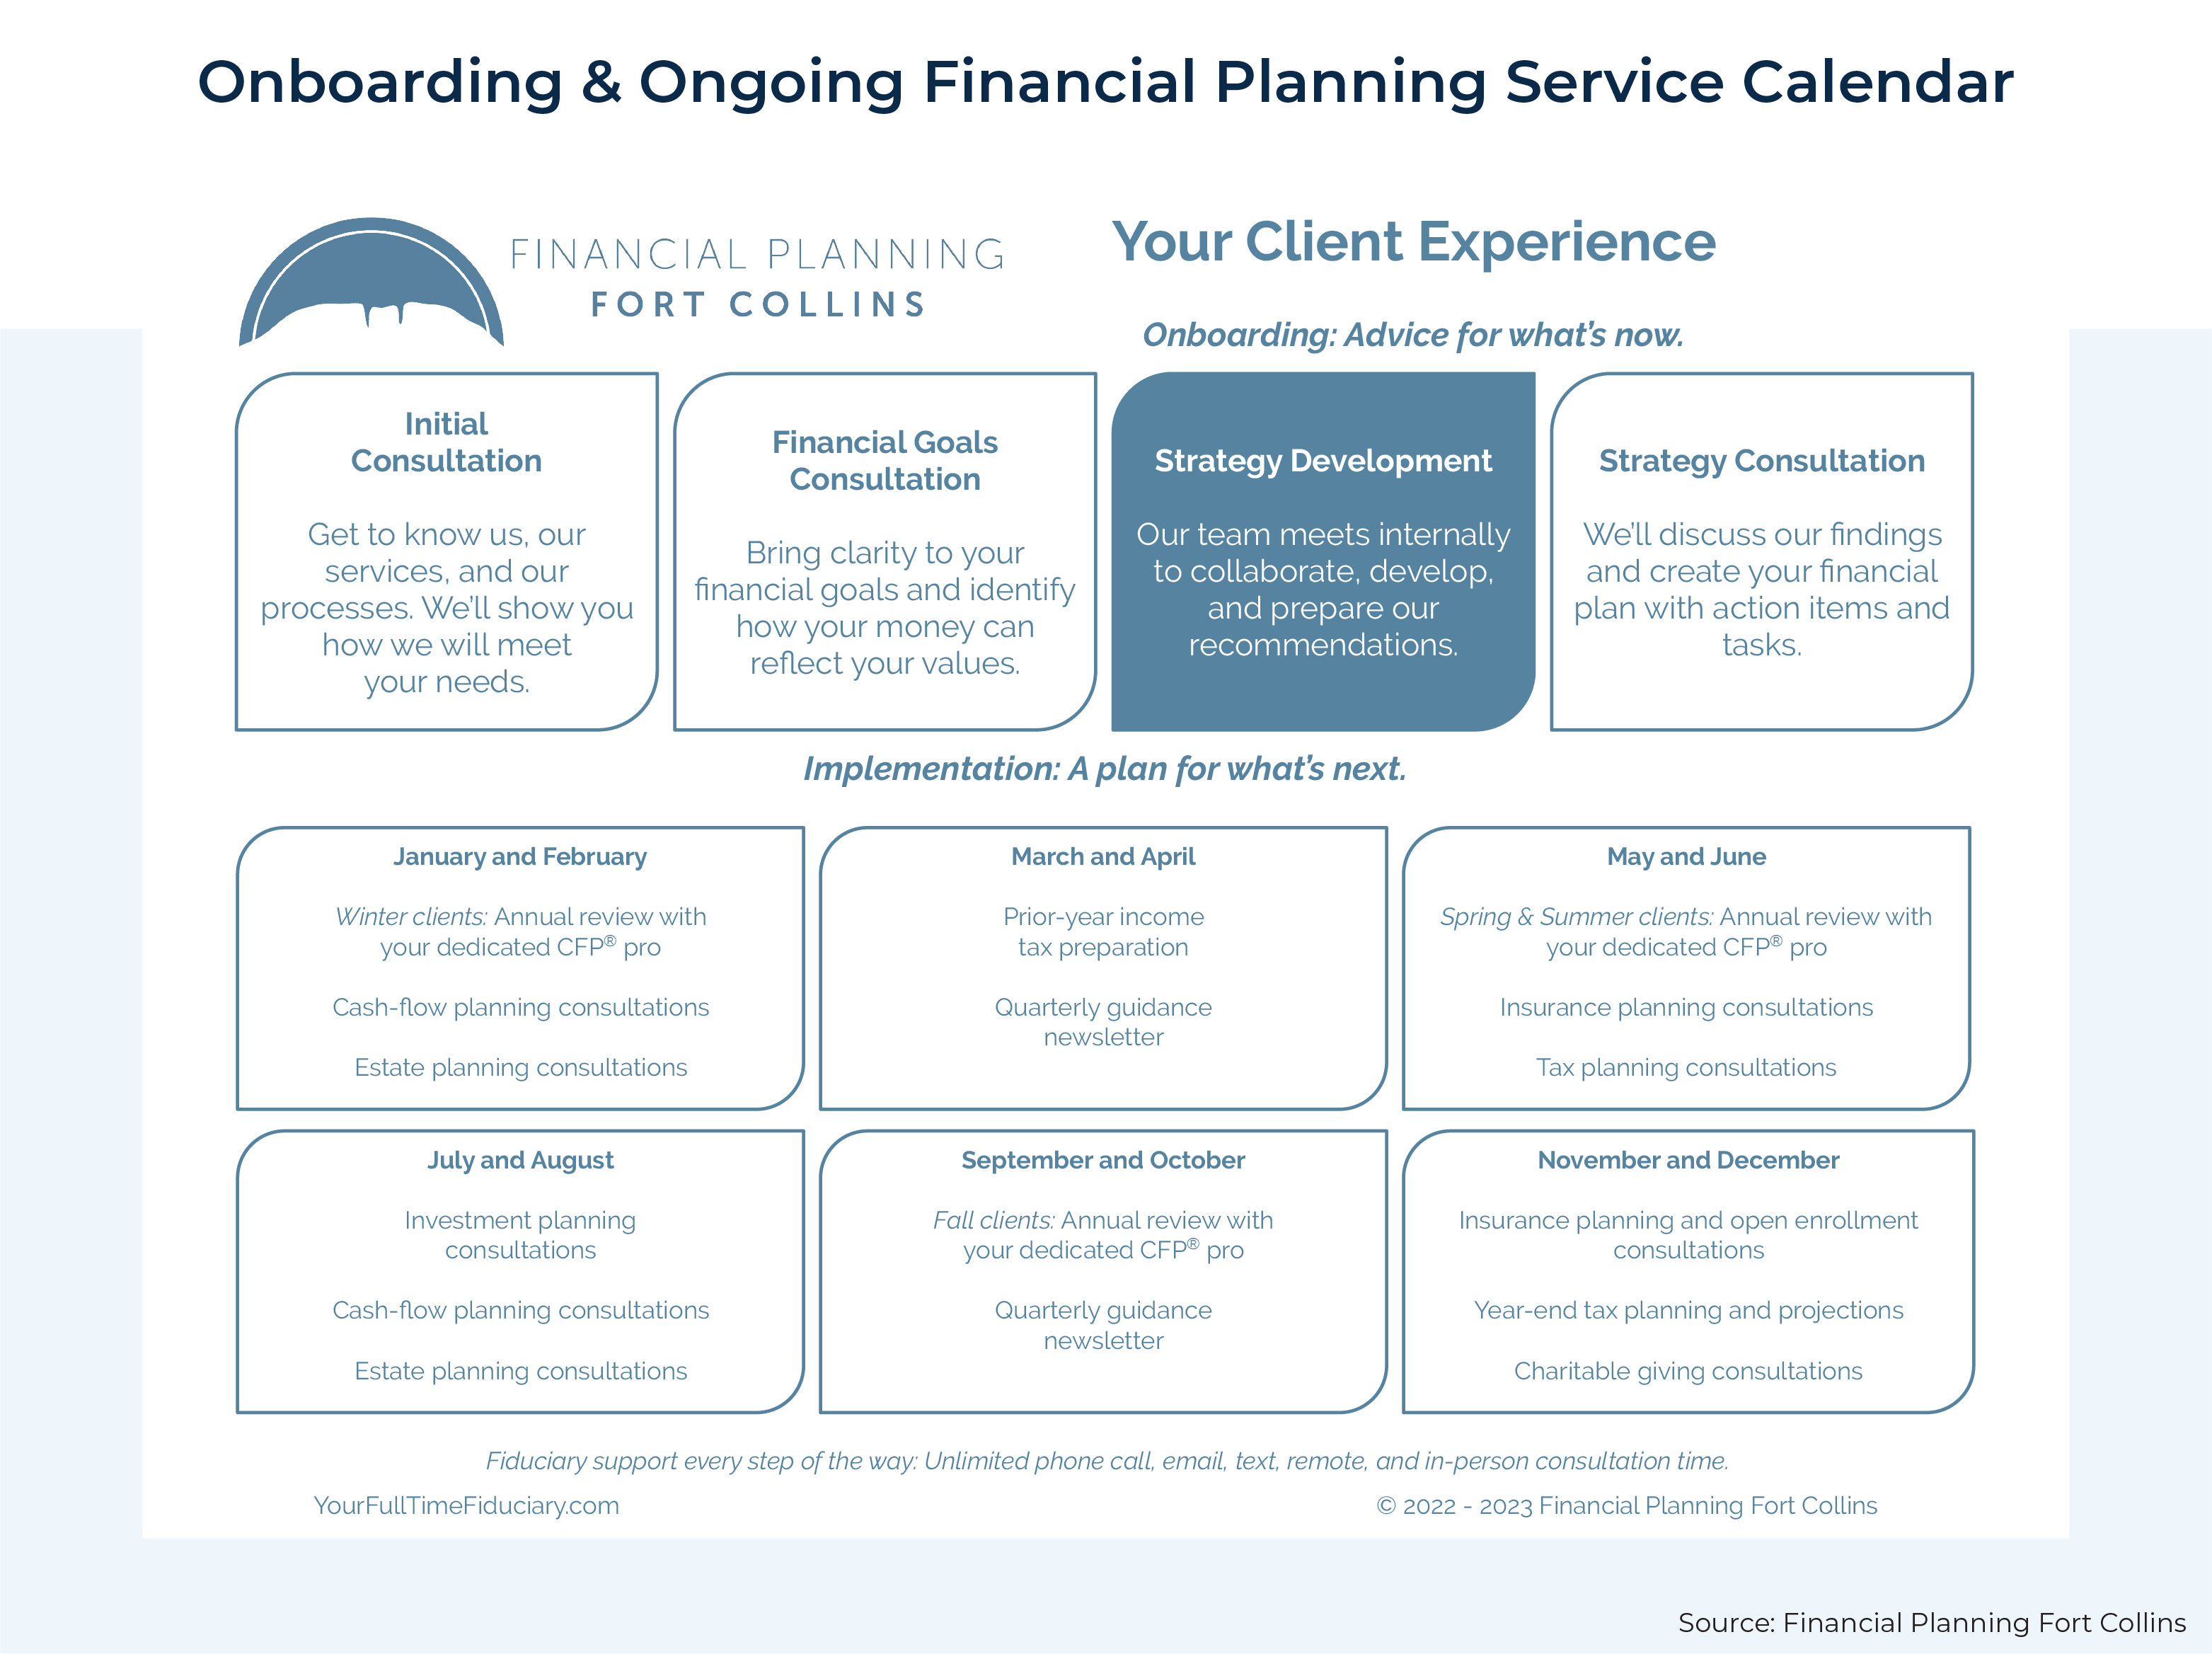 Planning Advisory Service